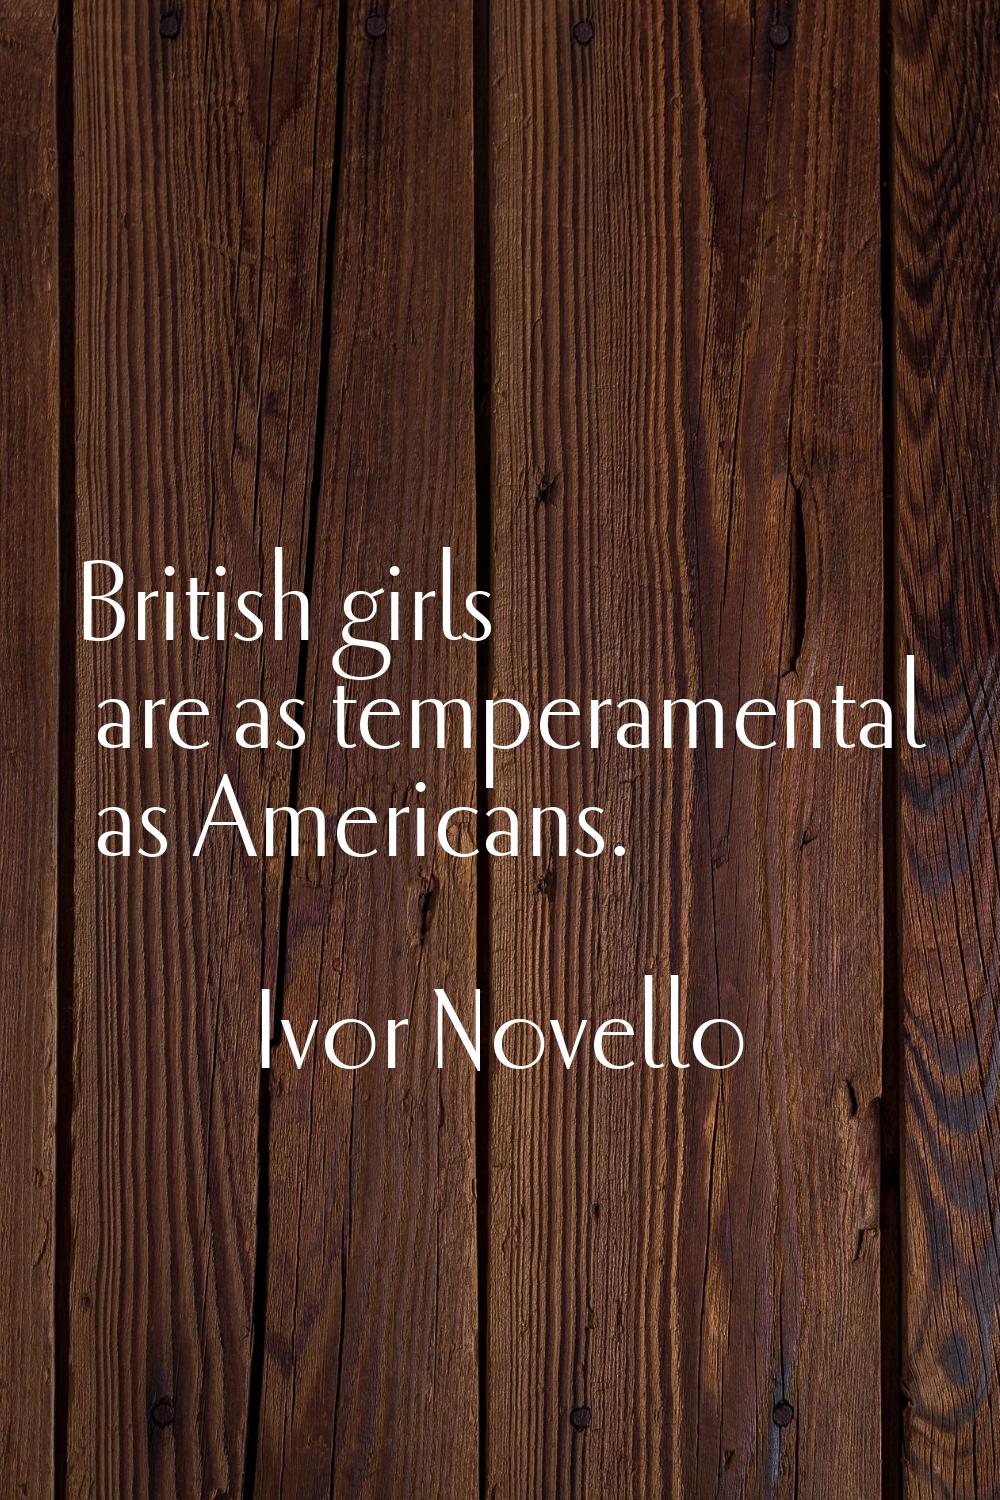 British girls are as temperamental as Americans.